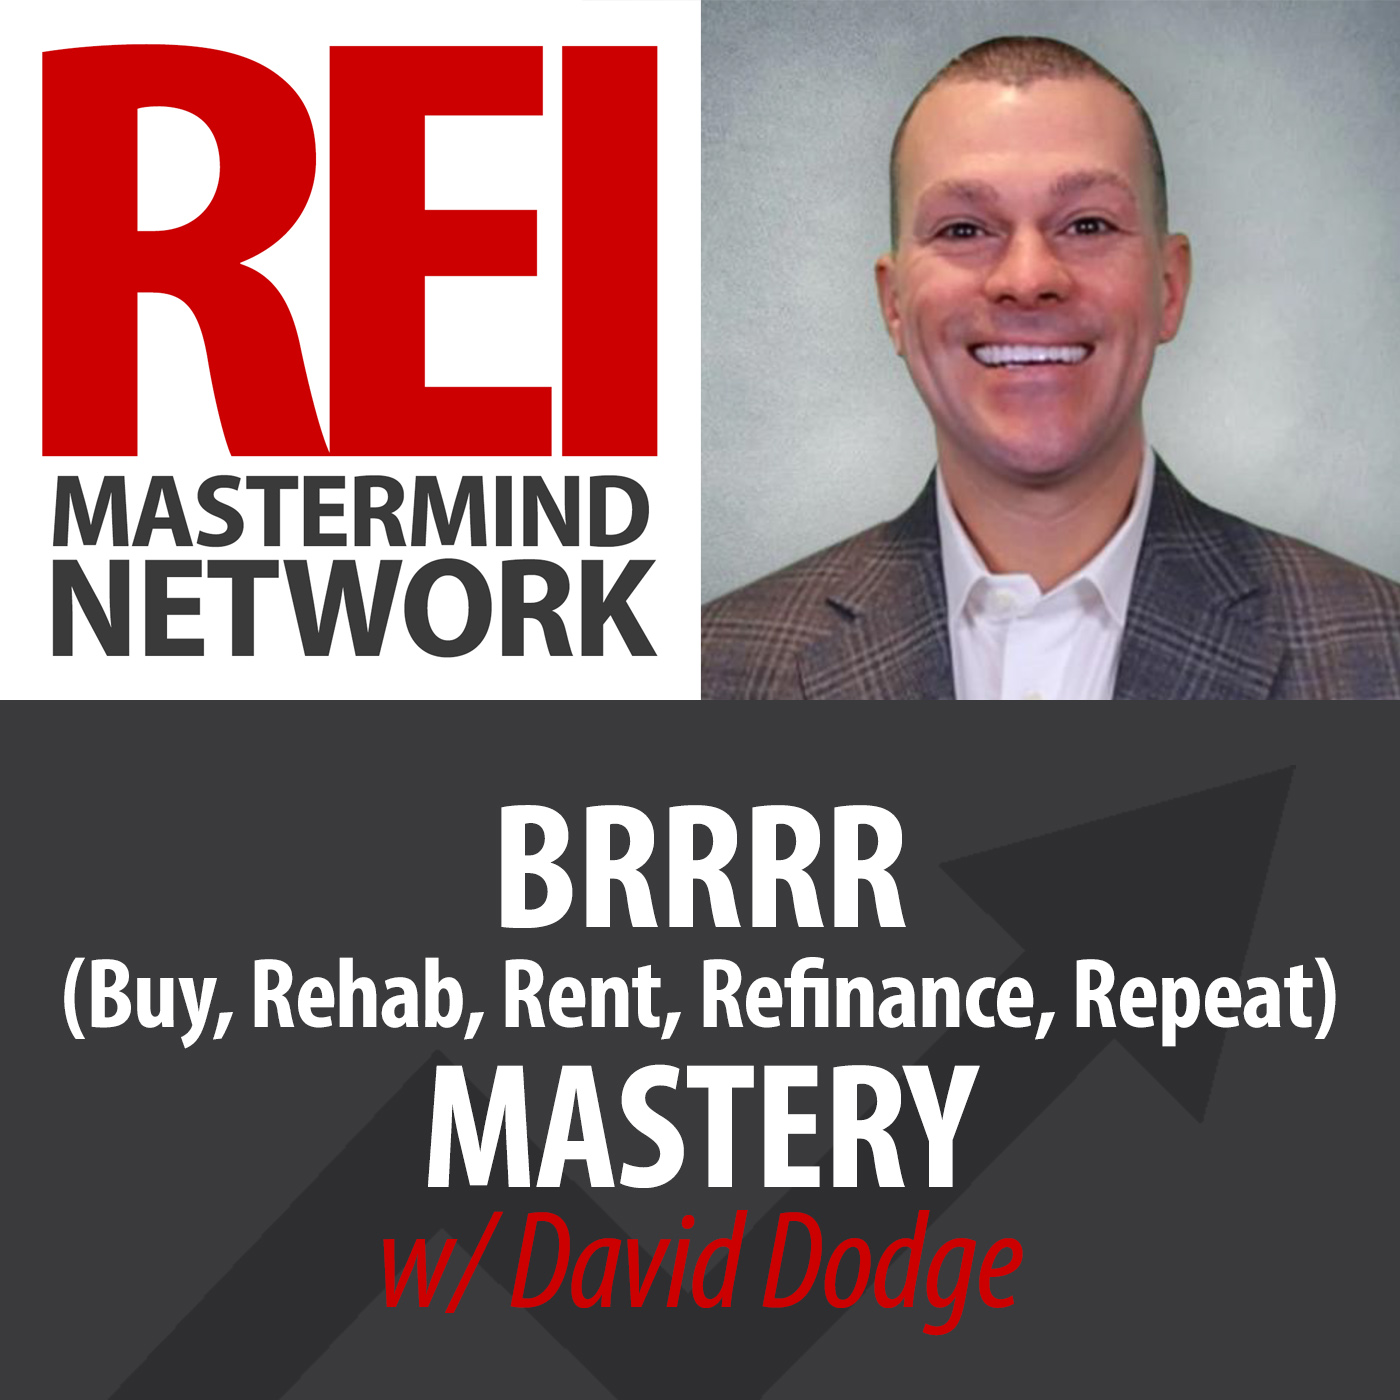 BRRRR Mastery with David Dodge